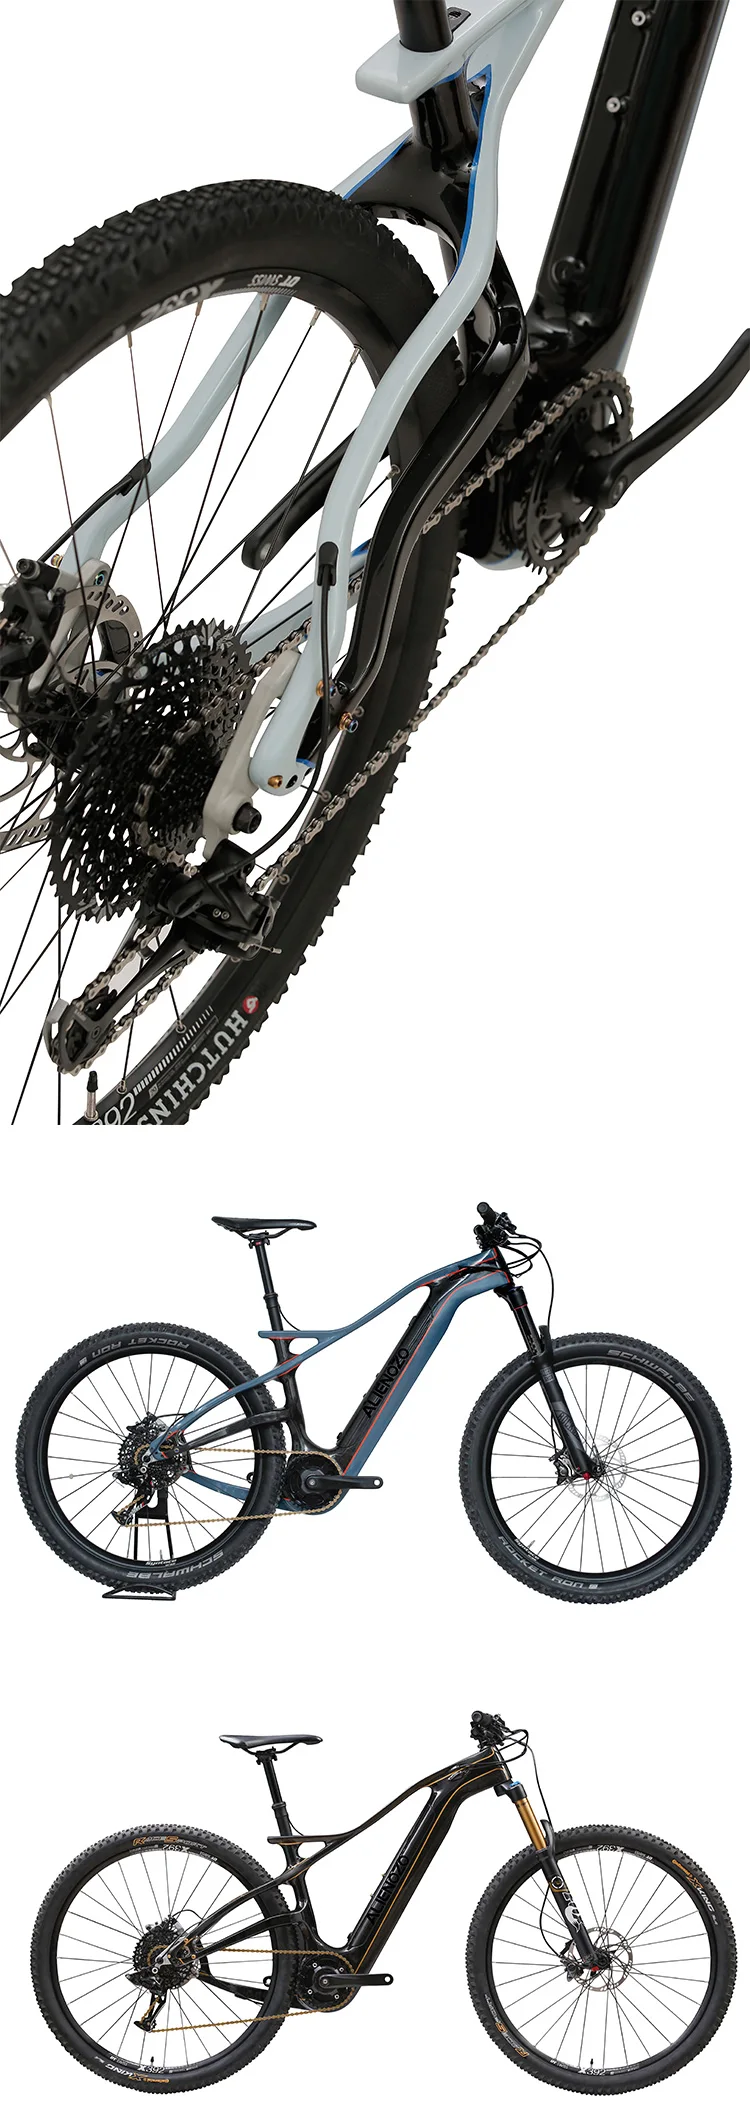 carbon fibre full suspension mountain bike